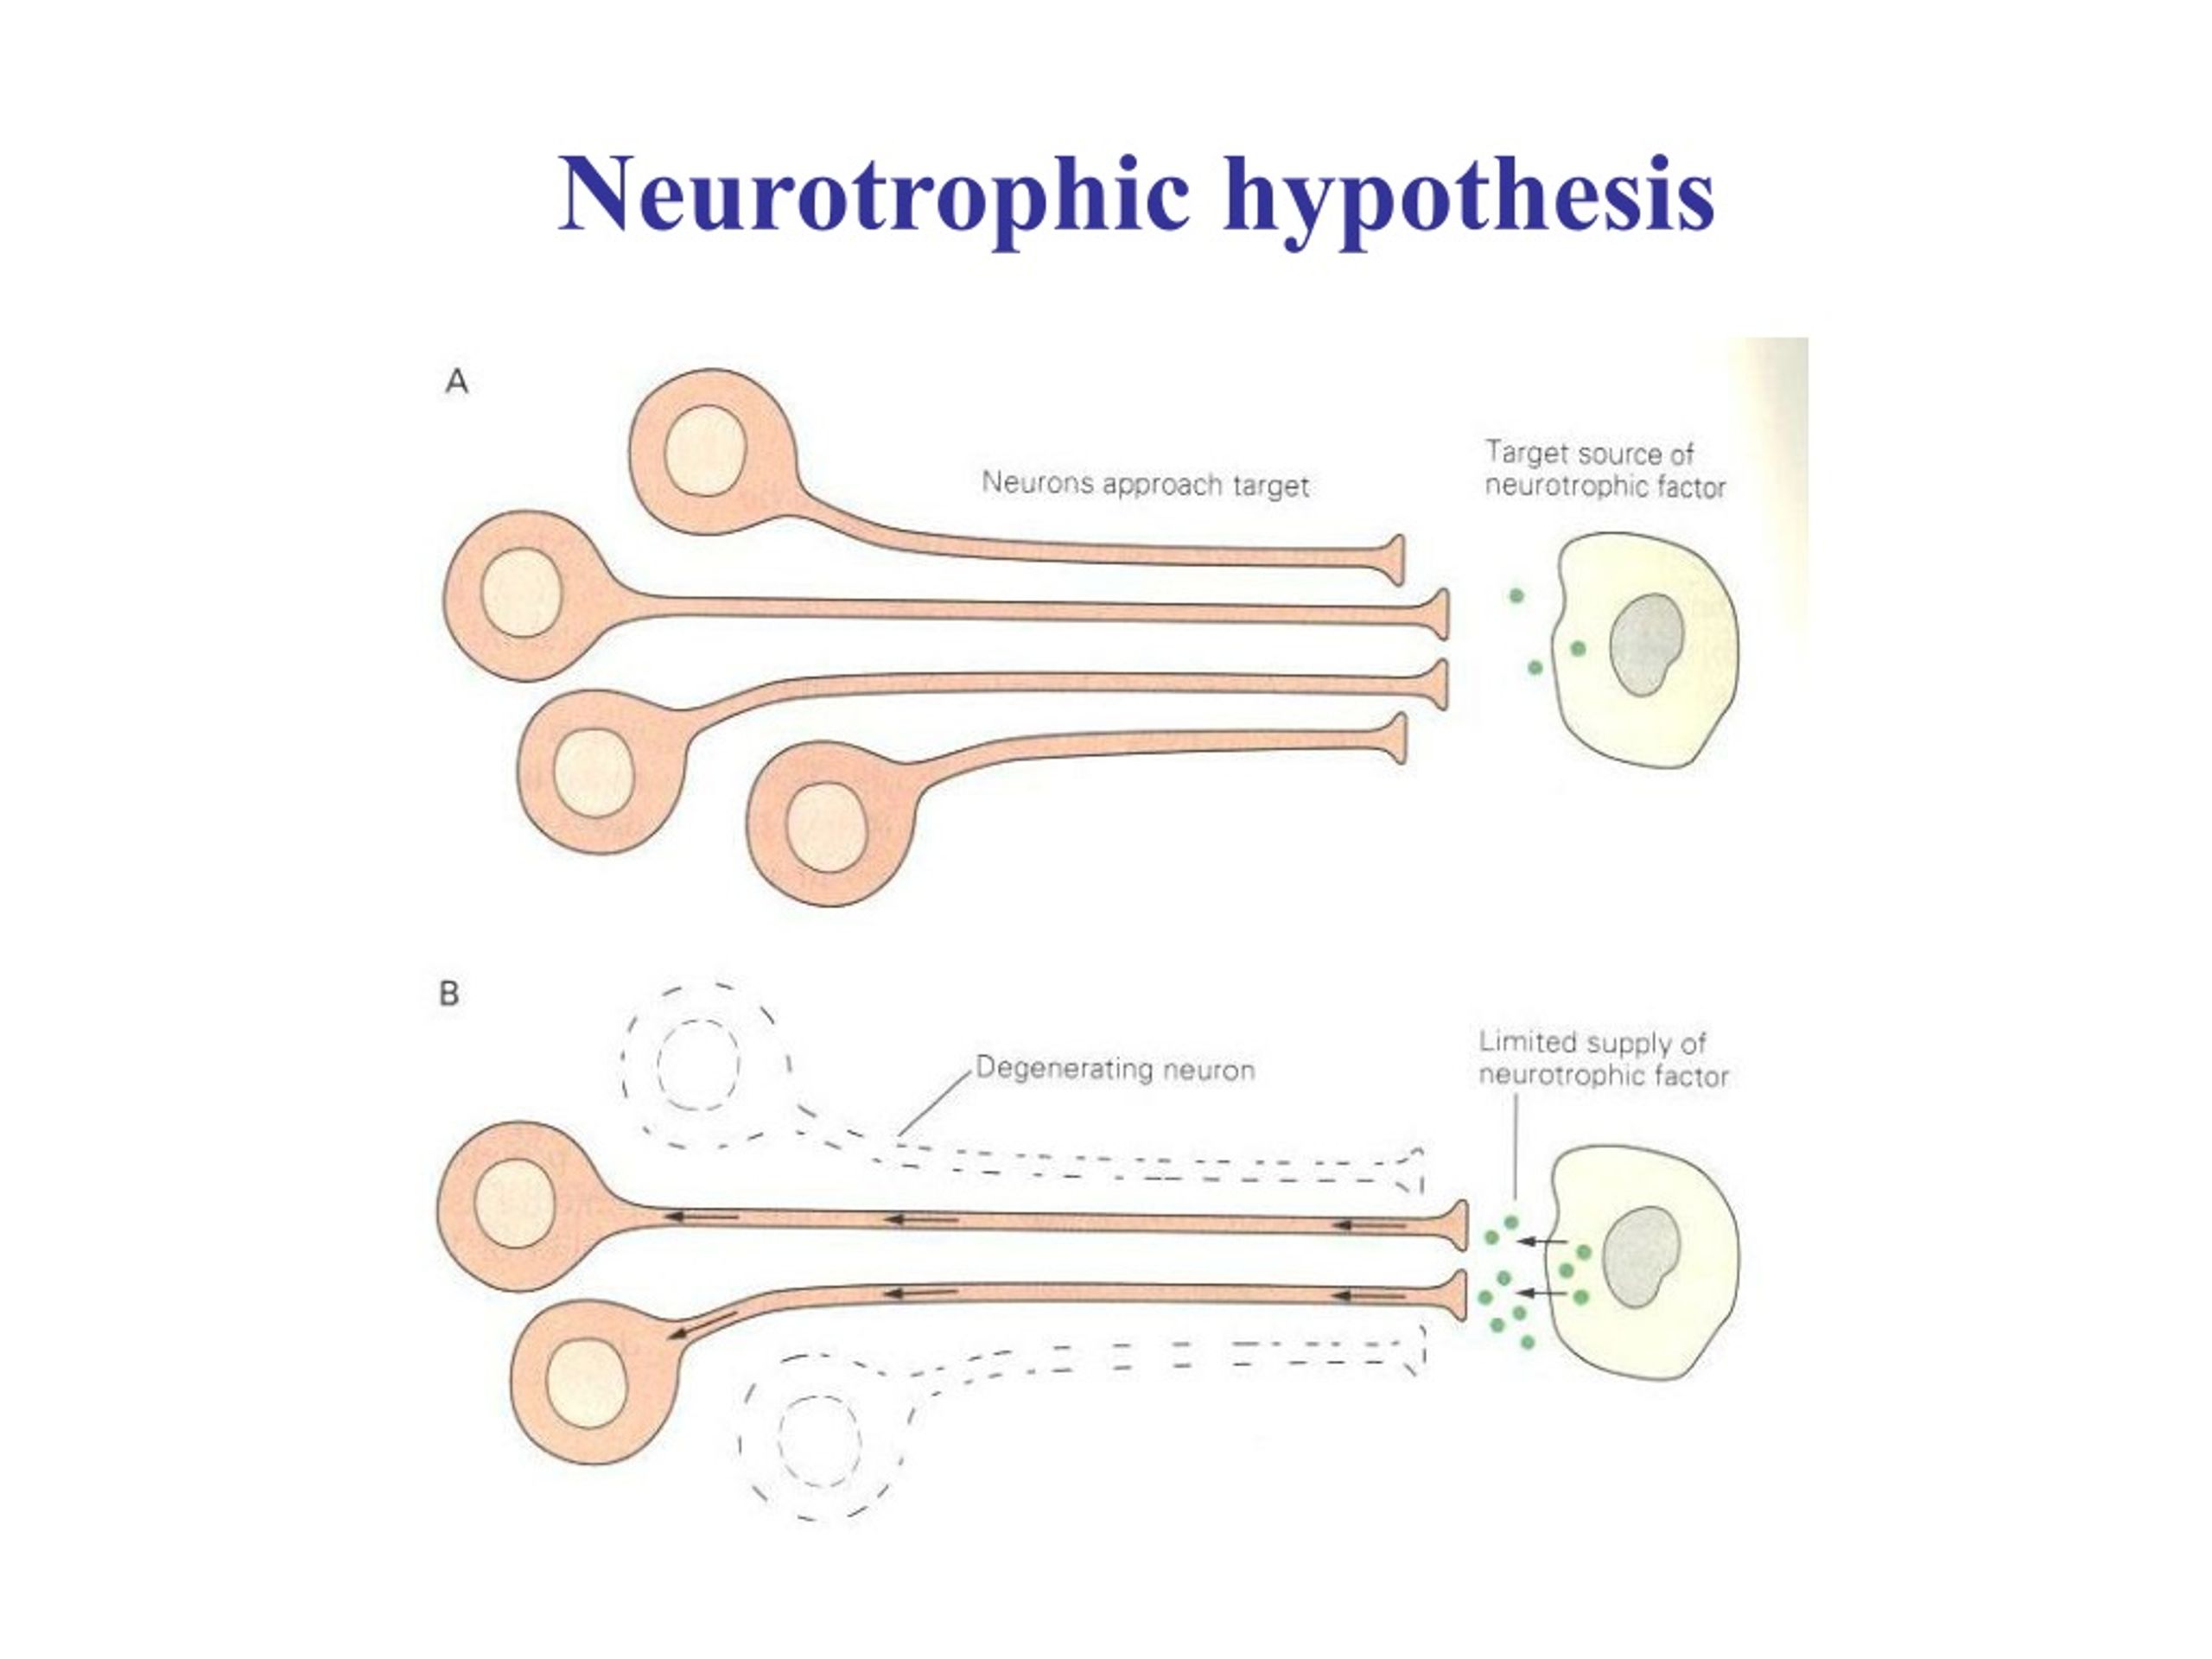 neurotrophic hypothesis means